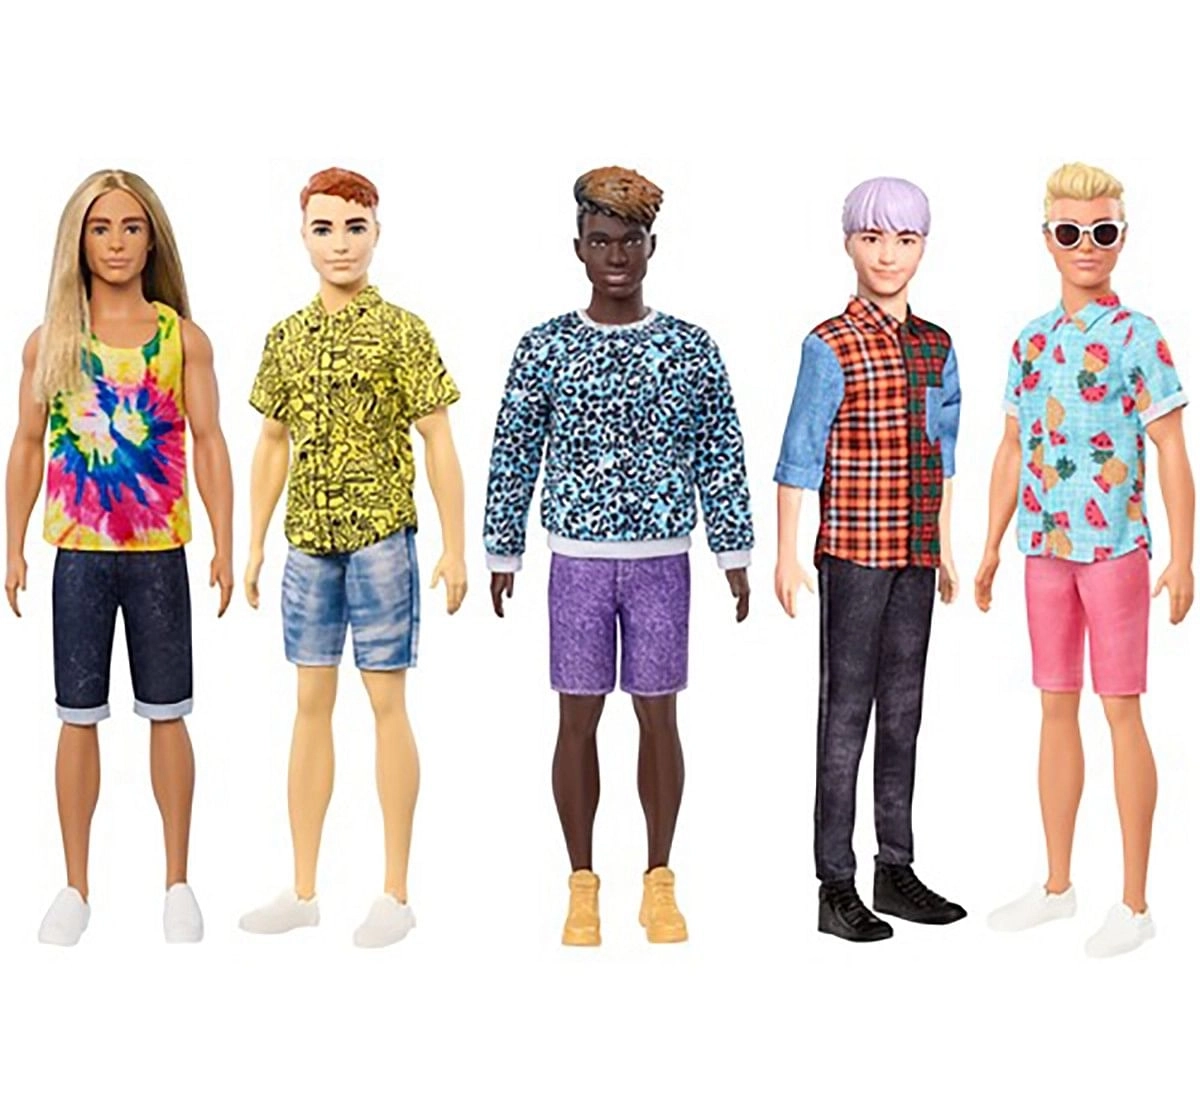 Barbie Ken Fashionistas Doll Assorted Dolls & Accessories for Girls age 3Y+ 